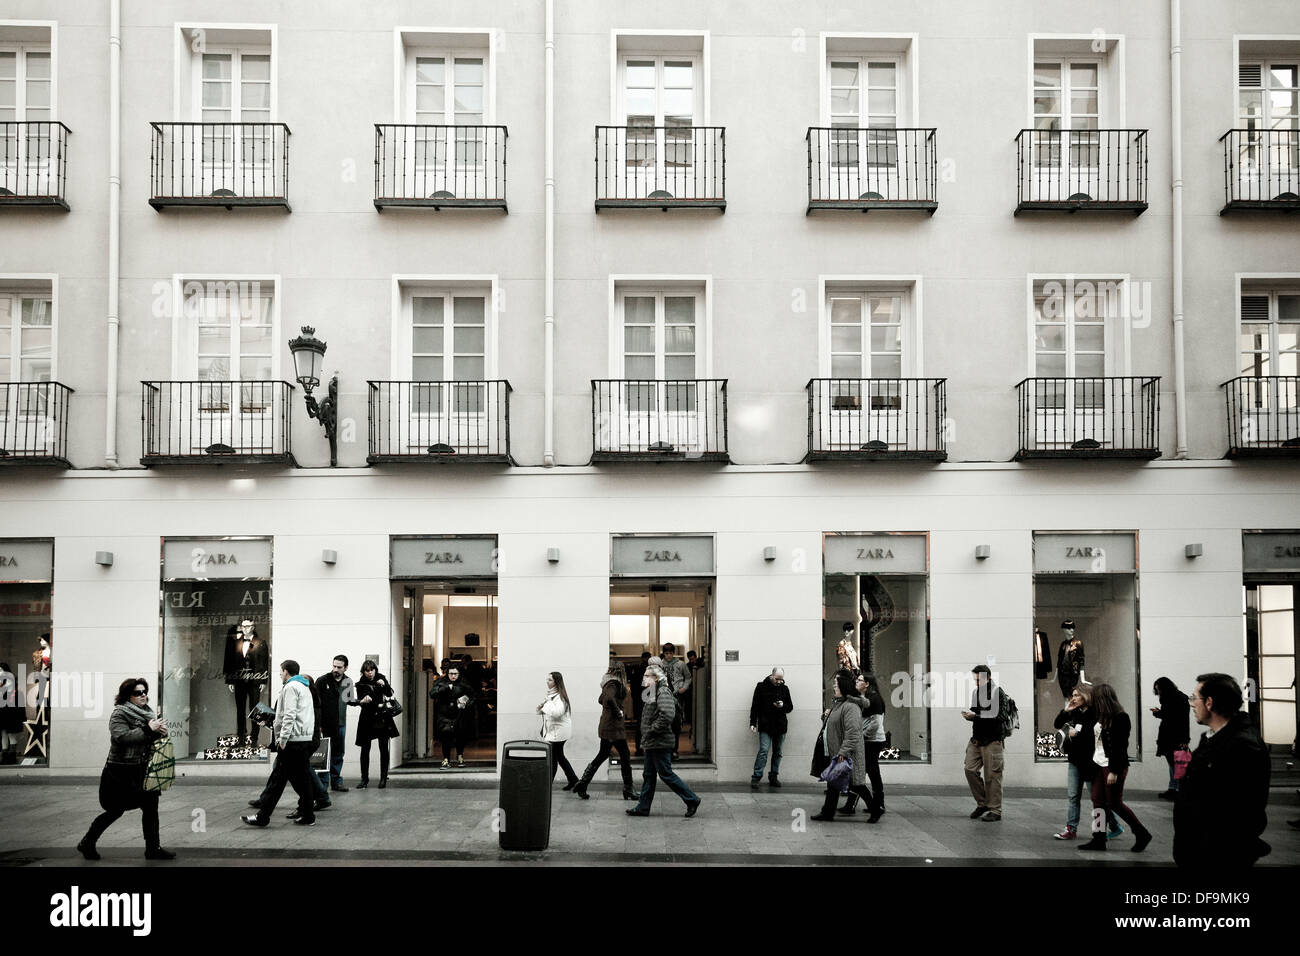 Zara facade shop in Preciados Street, Madrid Spain Stock Photo - Alamy